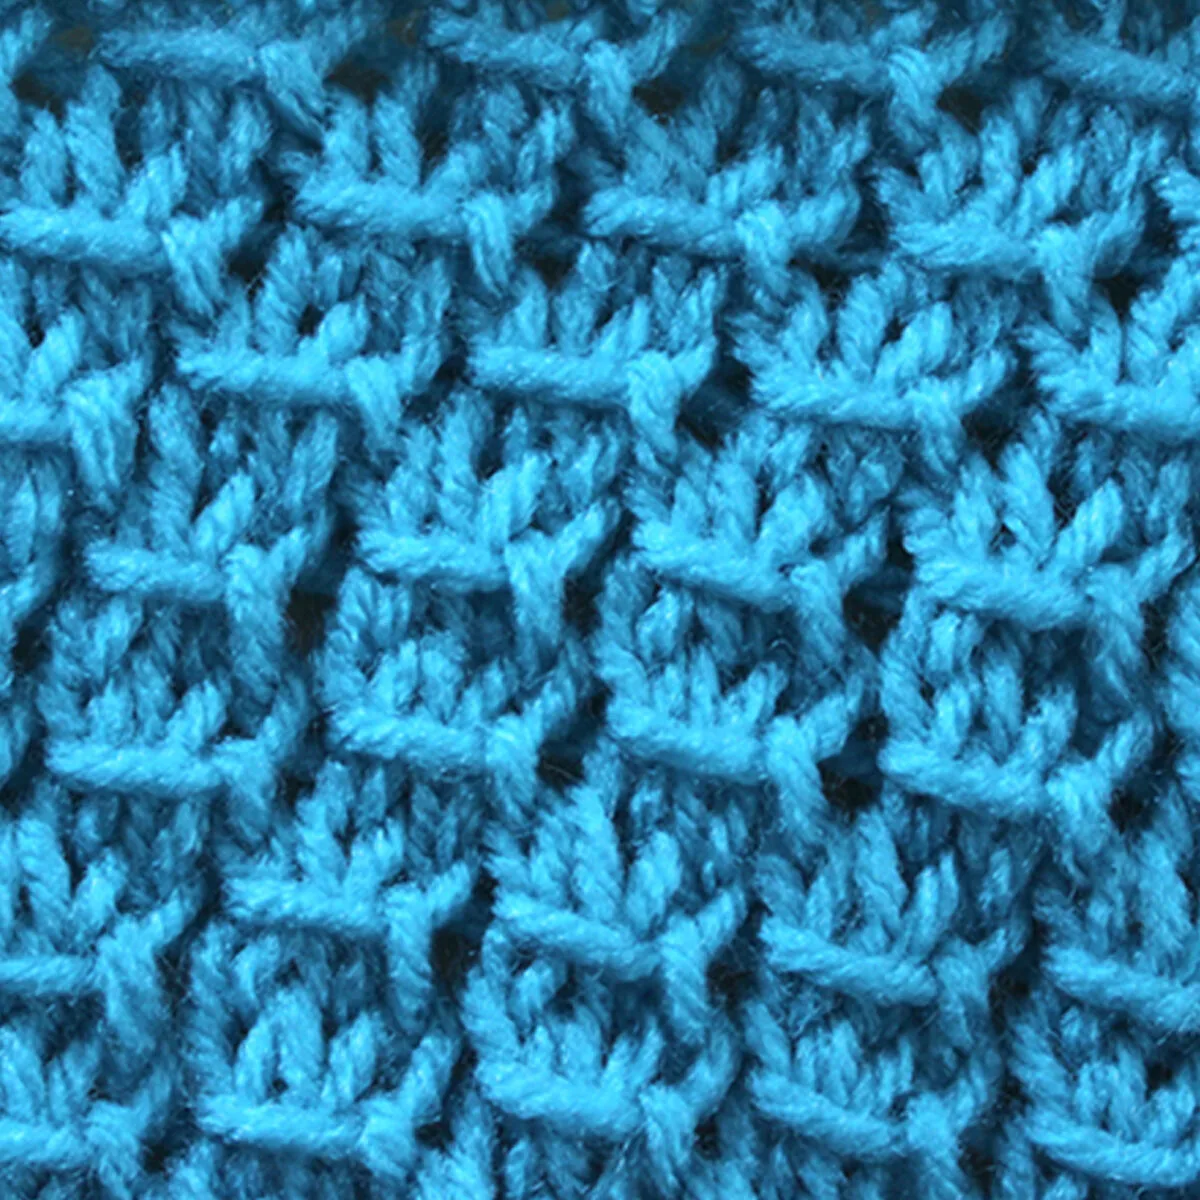 51 Knit Stitch Patterns for Beginning Knitters - Studio Knit